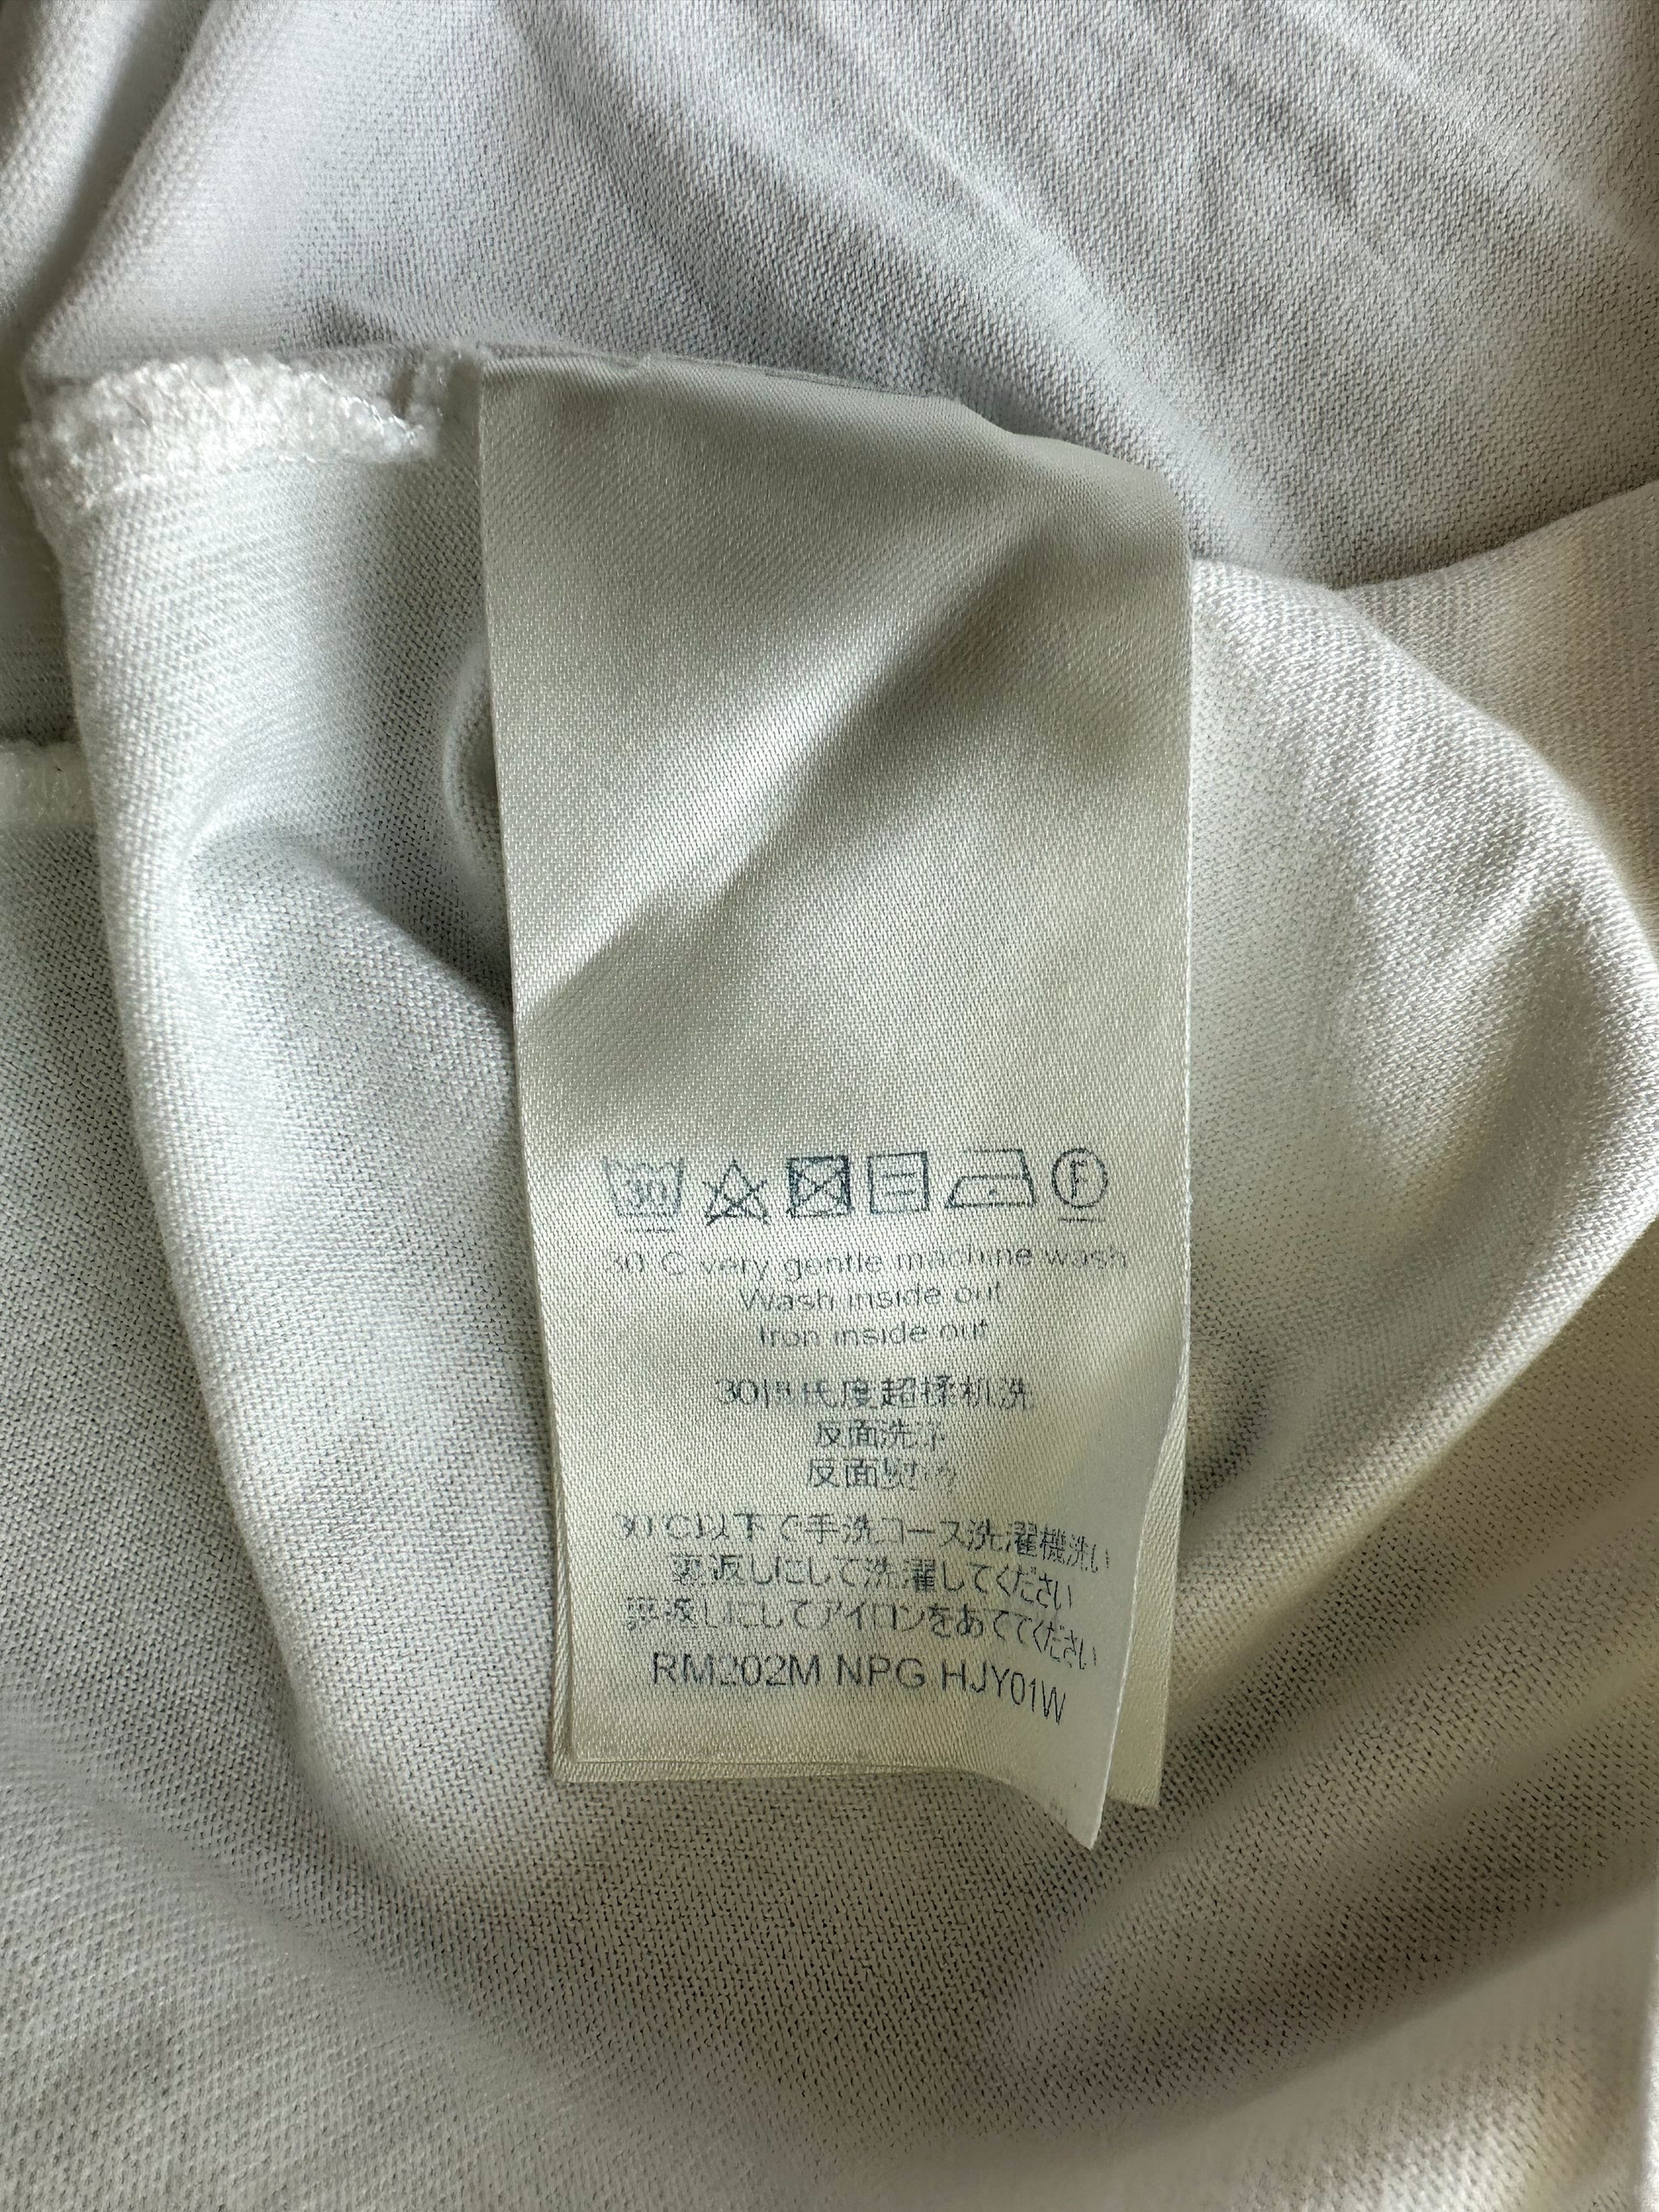 Louis Vuitton Off White Cotton Printed Logo Detail T-Shirt XL